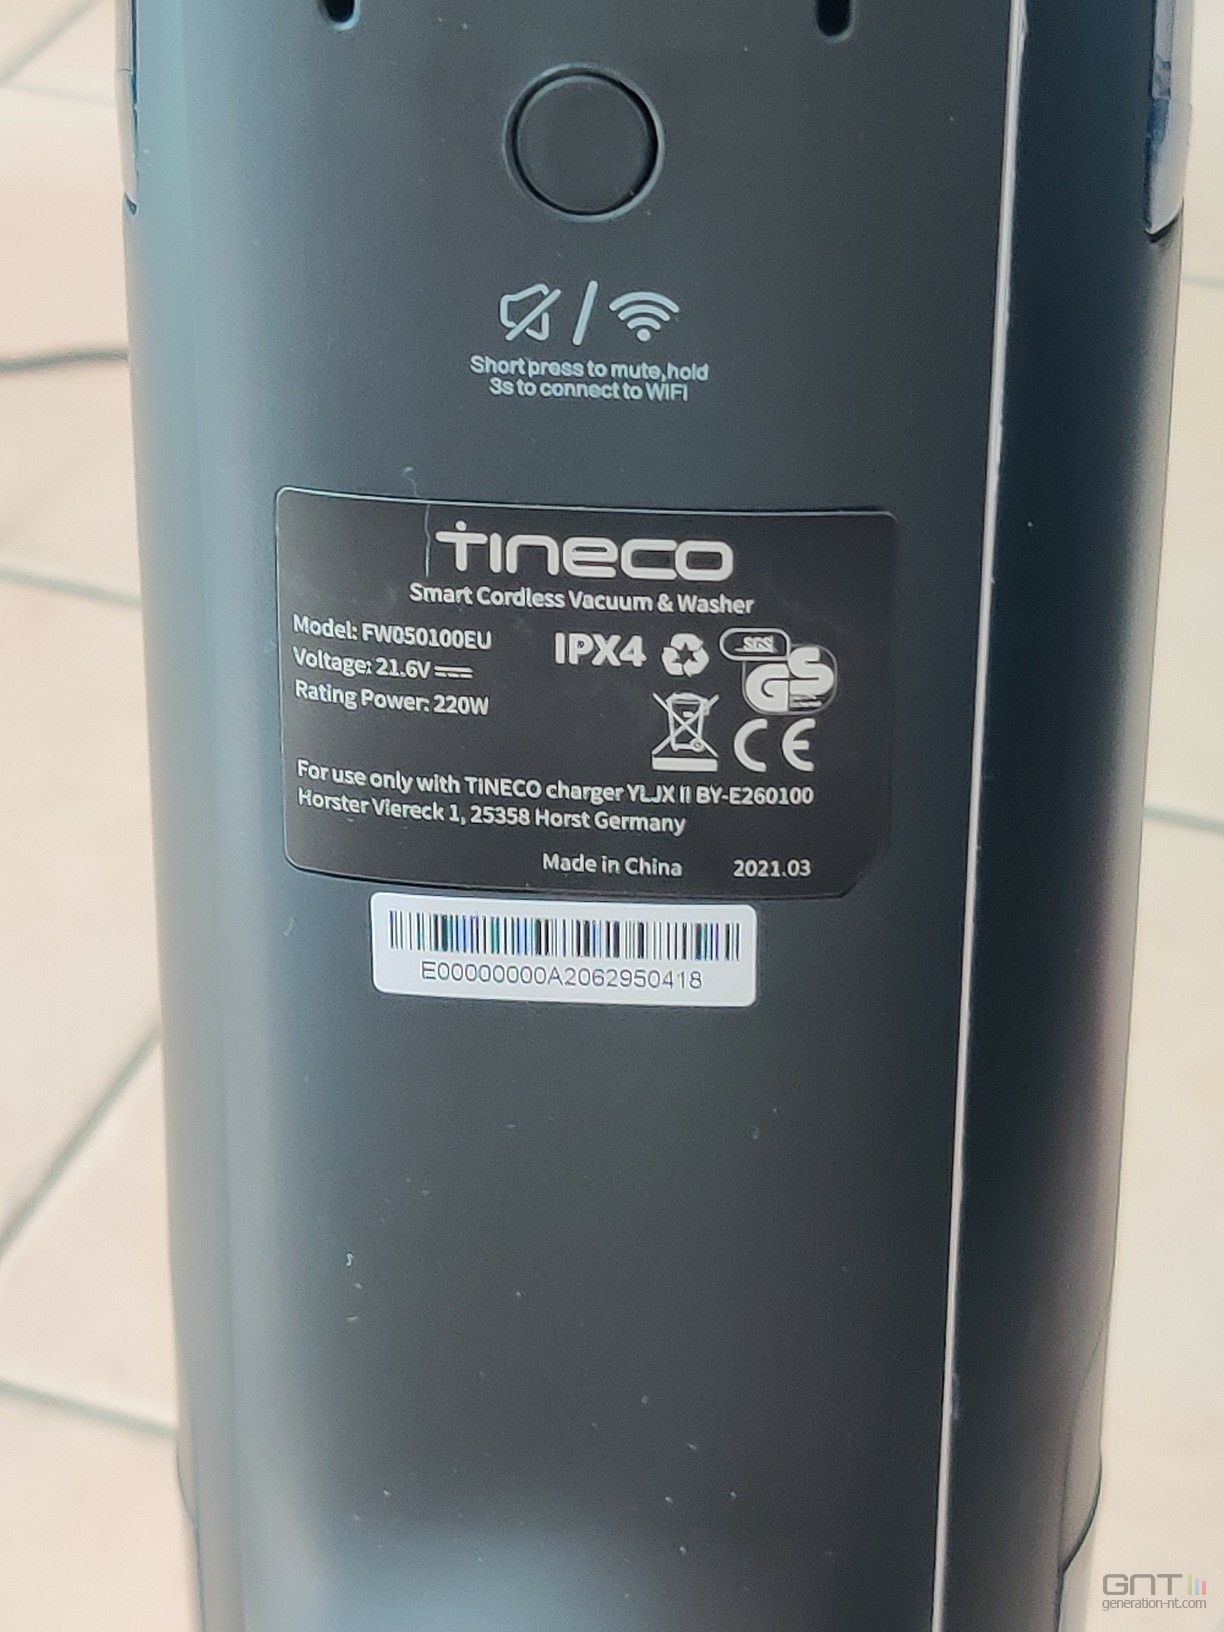 Tineco Floor One S3 - Connectivité WiFi